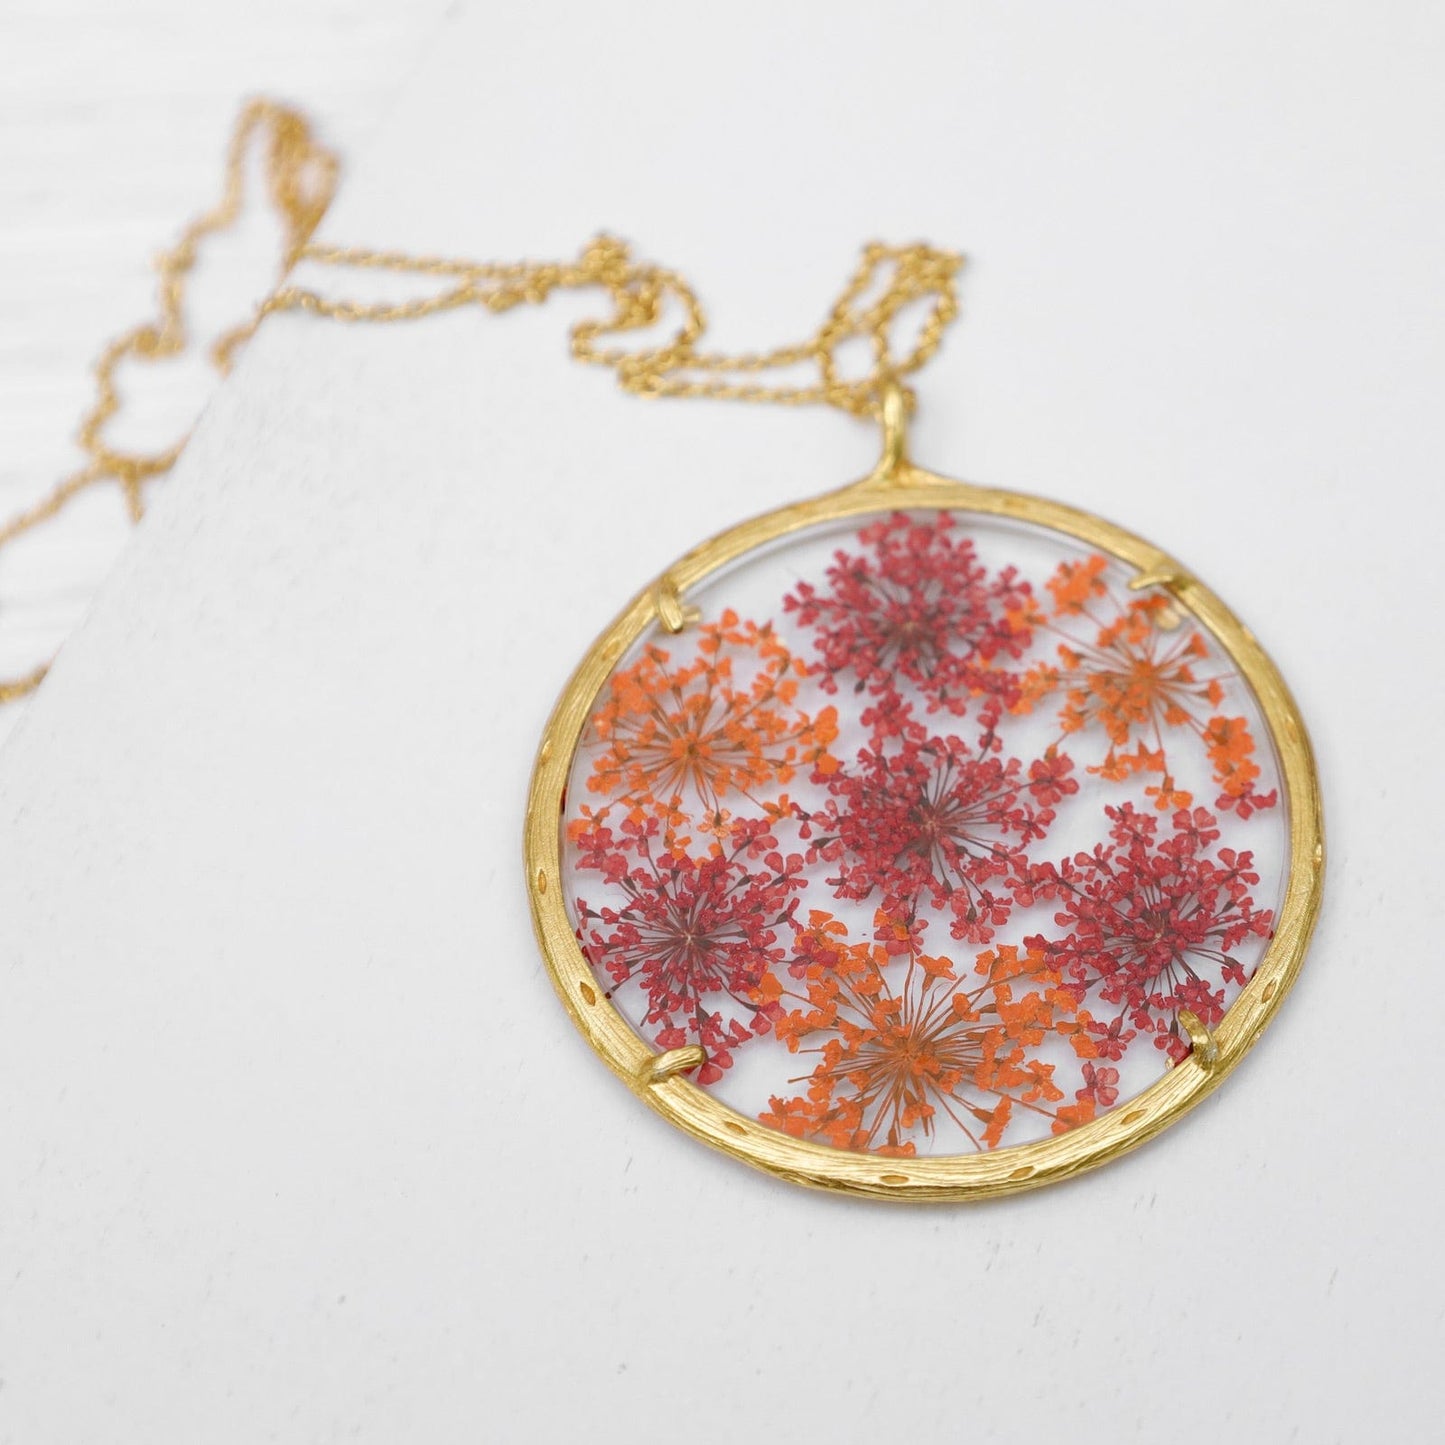 NKL-VRM Red & Orange Queen Anne's Lace Extra Large Botanical Necklace - 18k Gold Vermeil